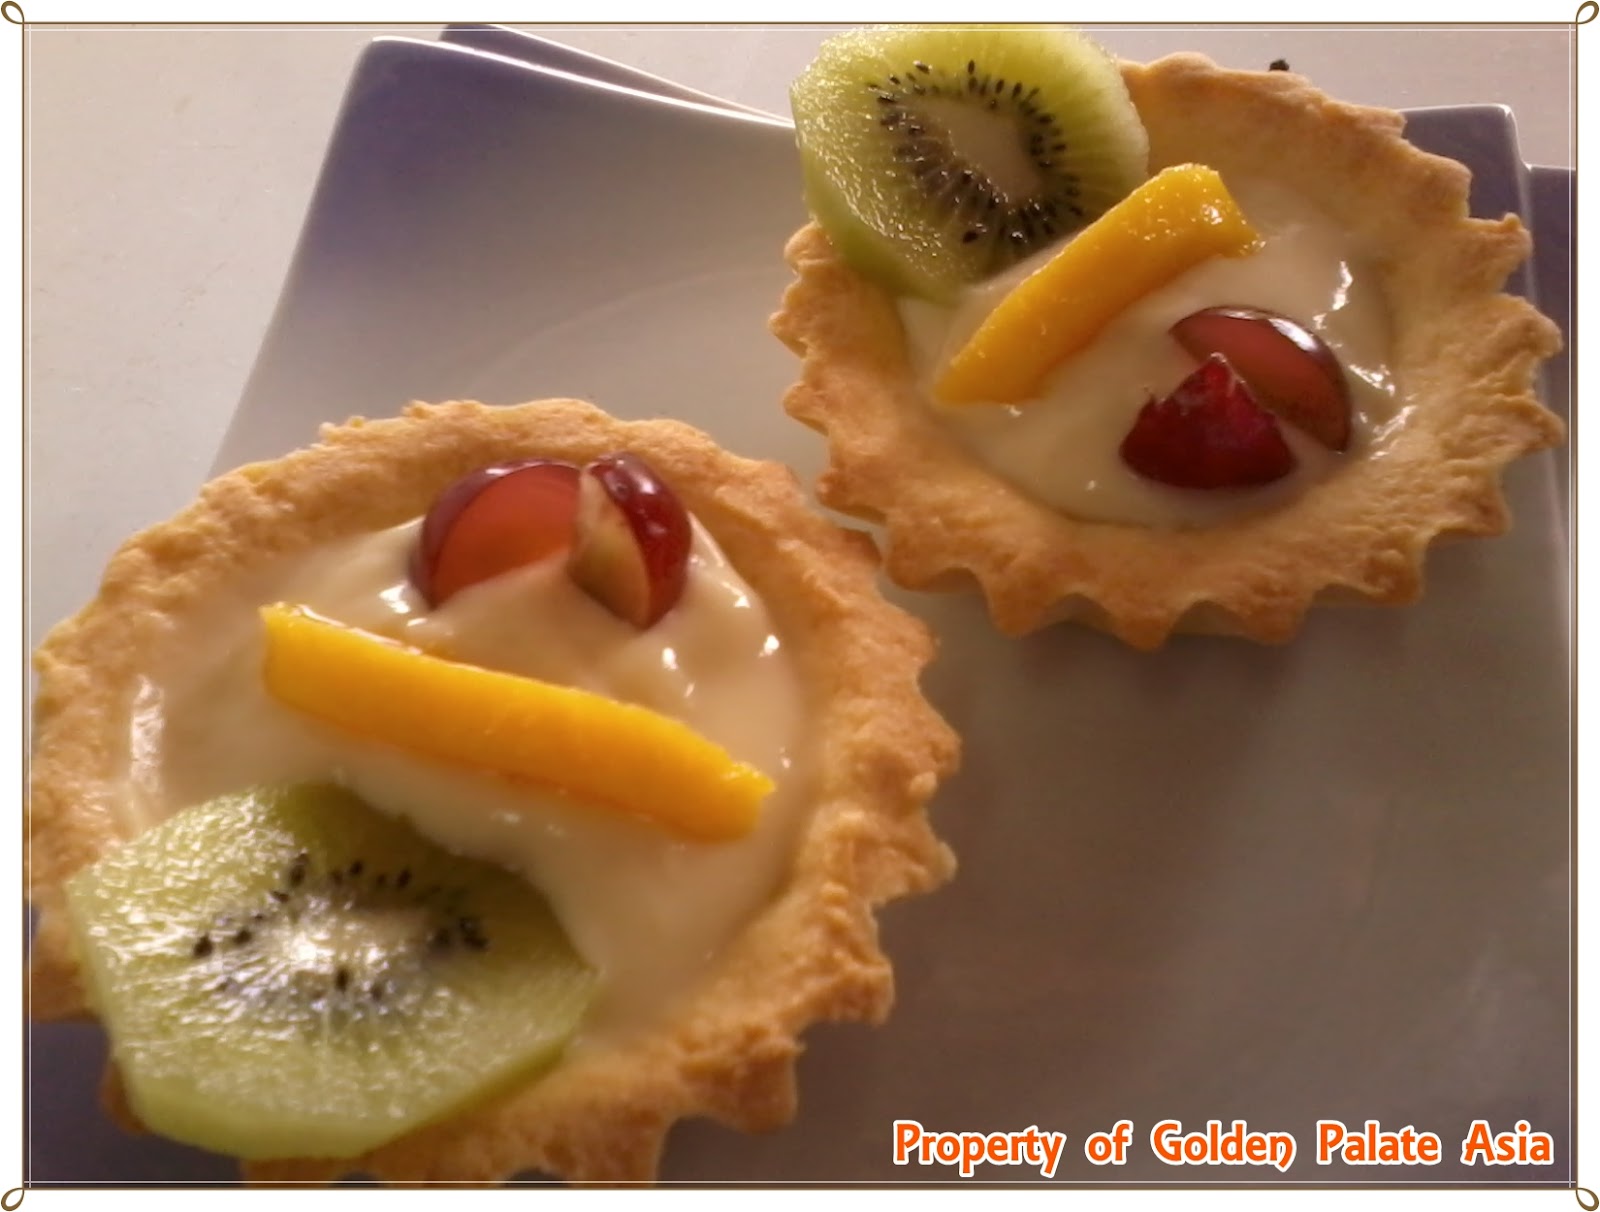 Golden Palate Asia: Fruit Tartlets with Custard Crème filling